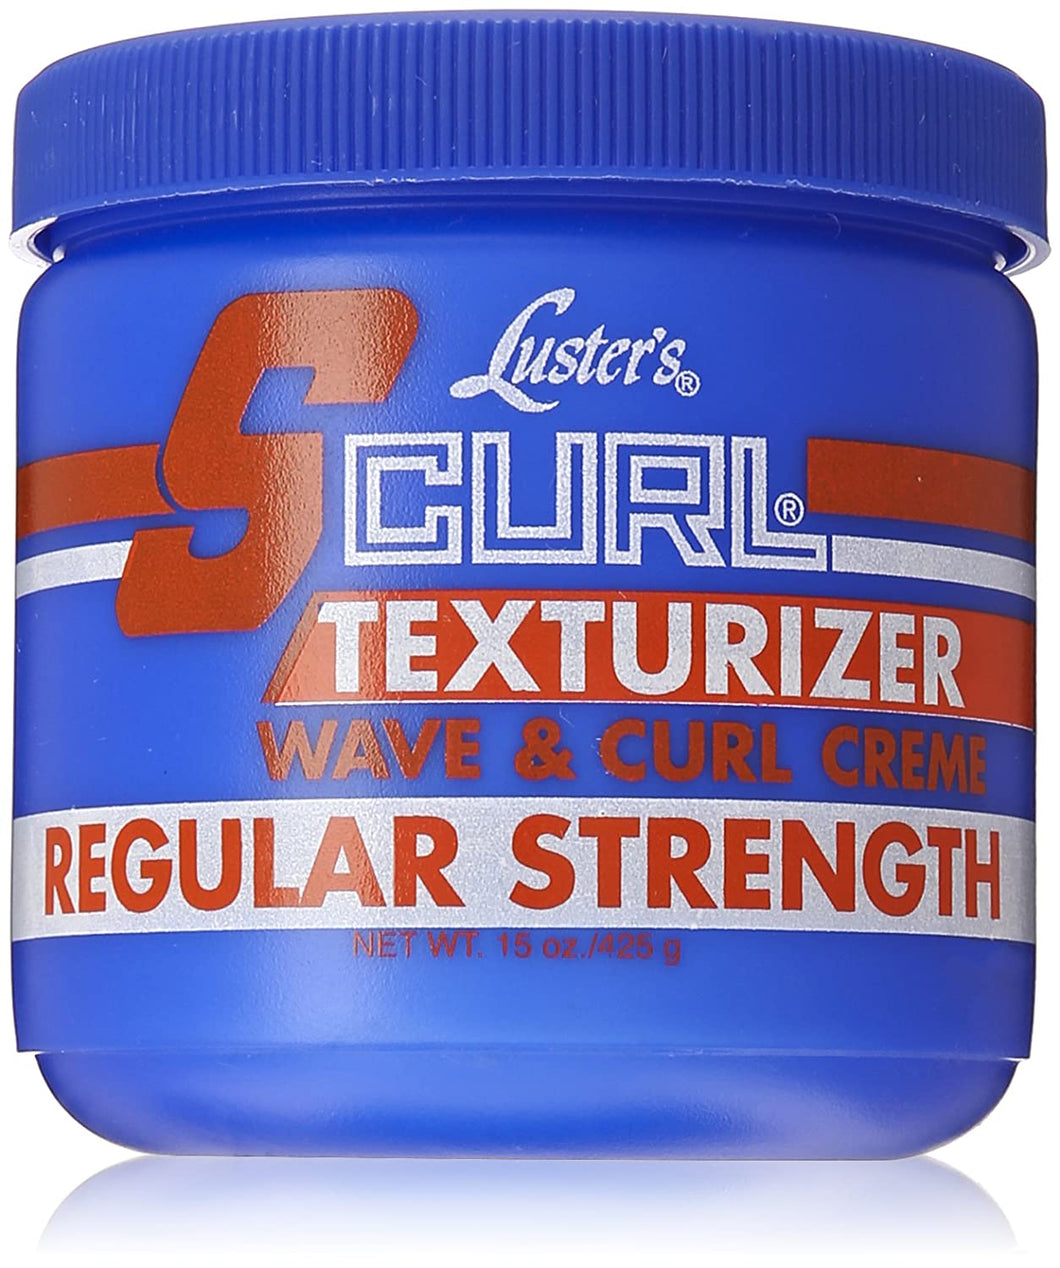 Luster's Scurl Texturizer Regular Strength